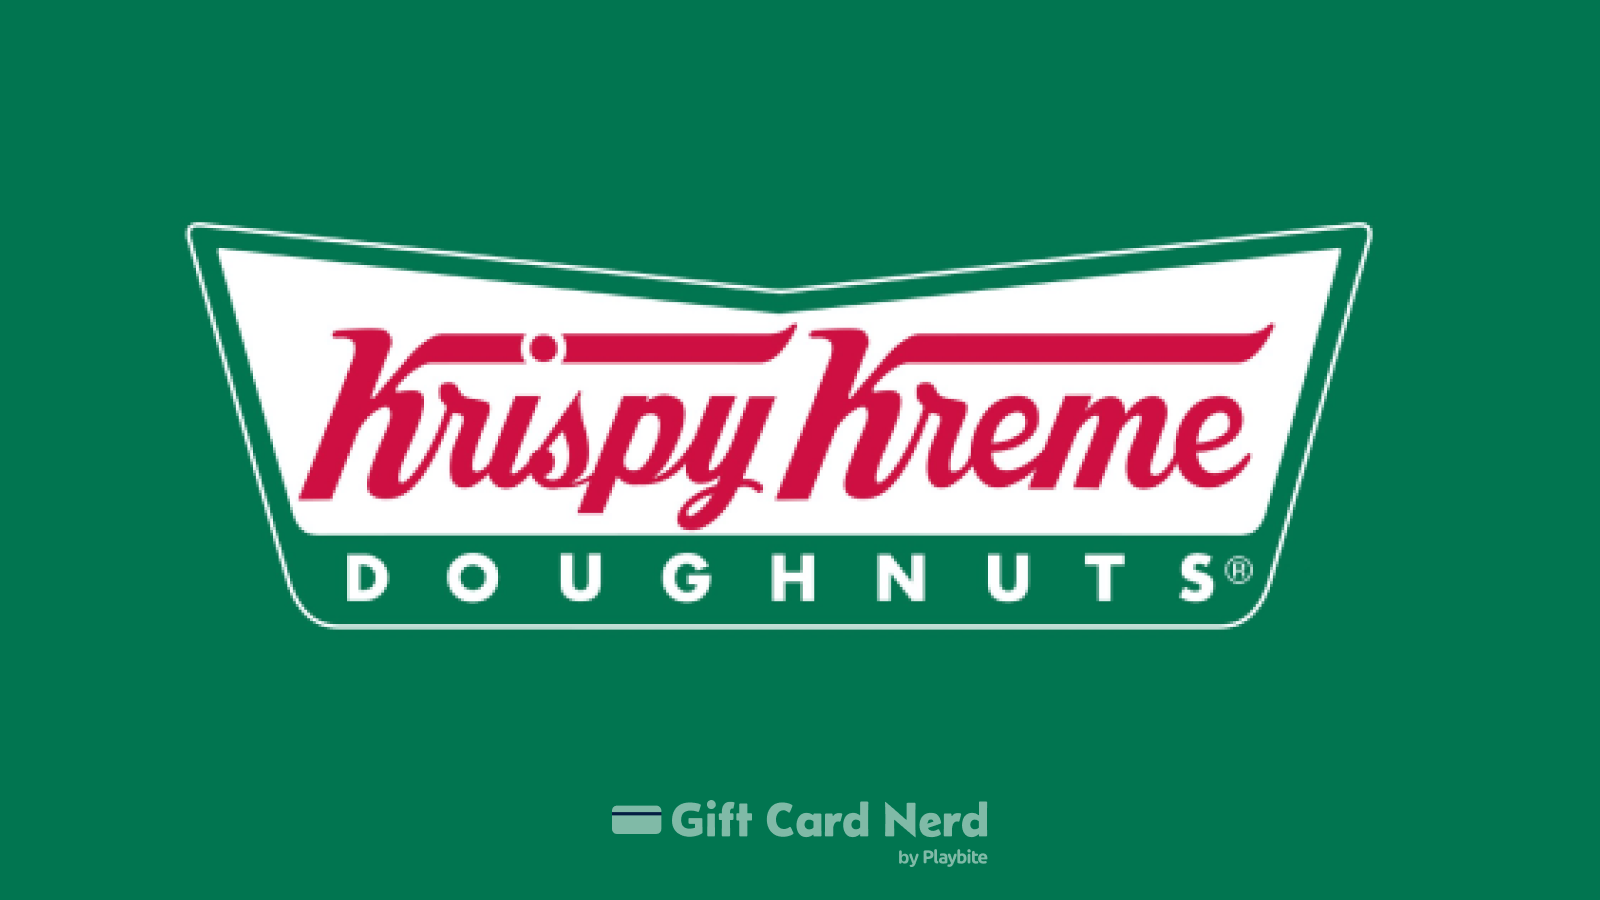 Can You Use a Krispy Kreme Gift Card on Venmo?